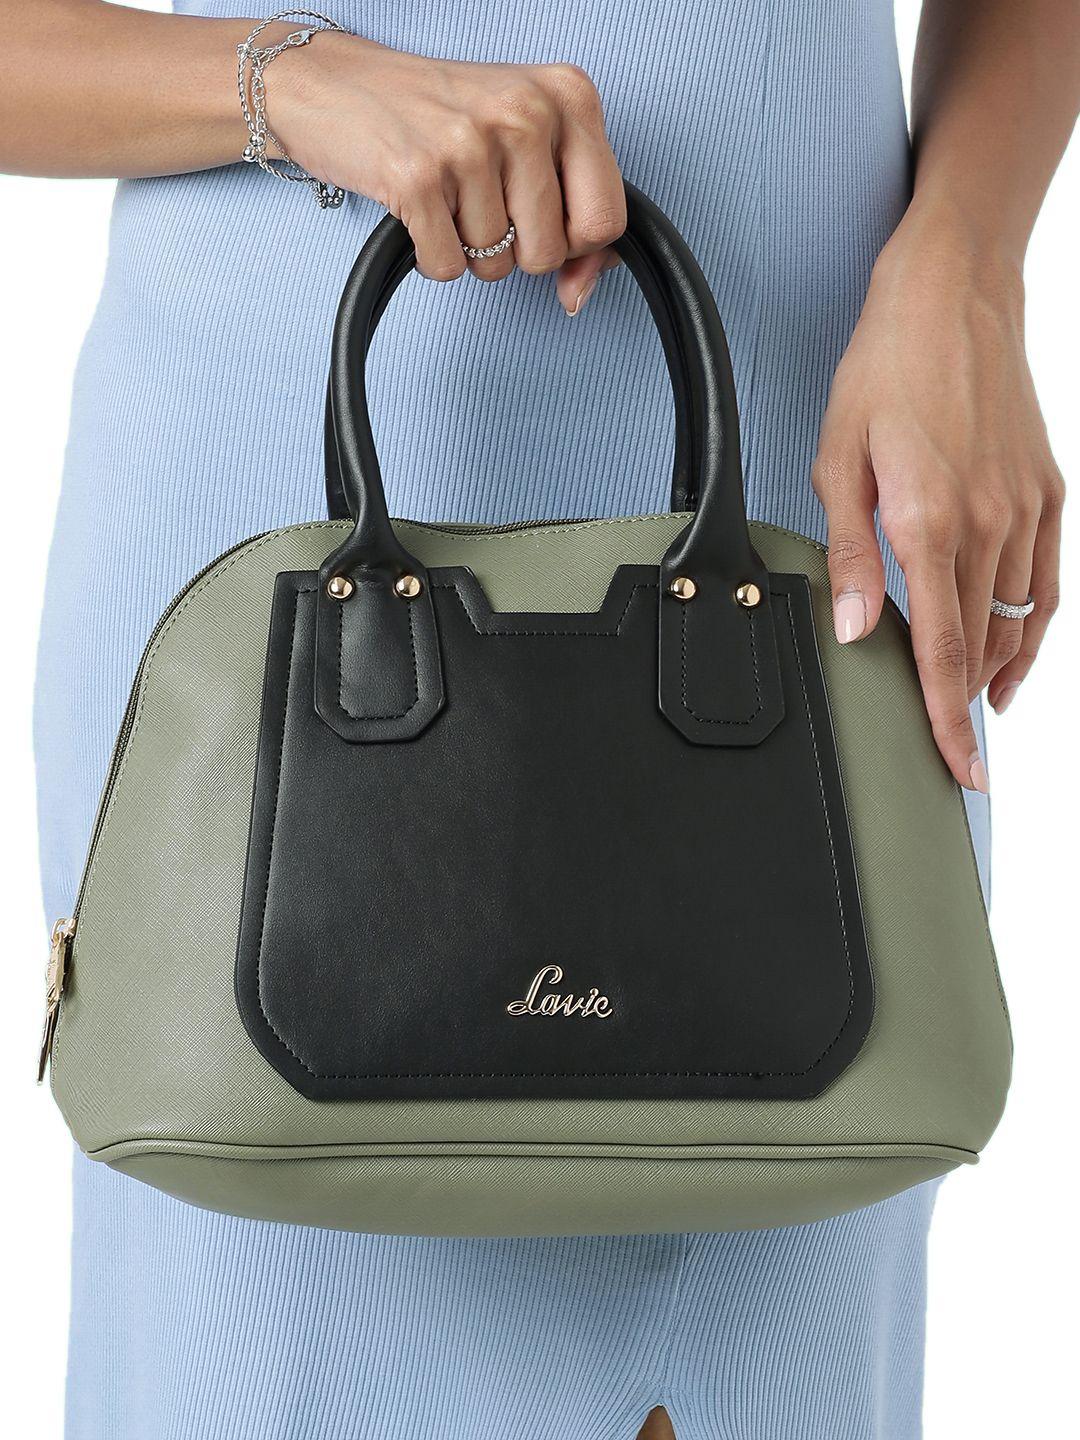 lavie cabanel women olive green and black medium satchel